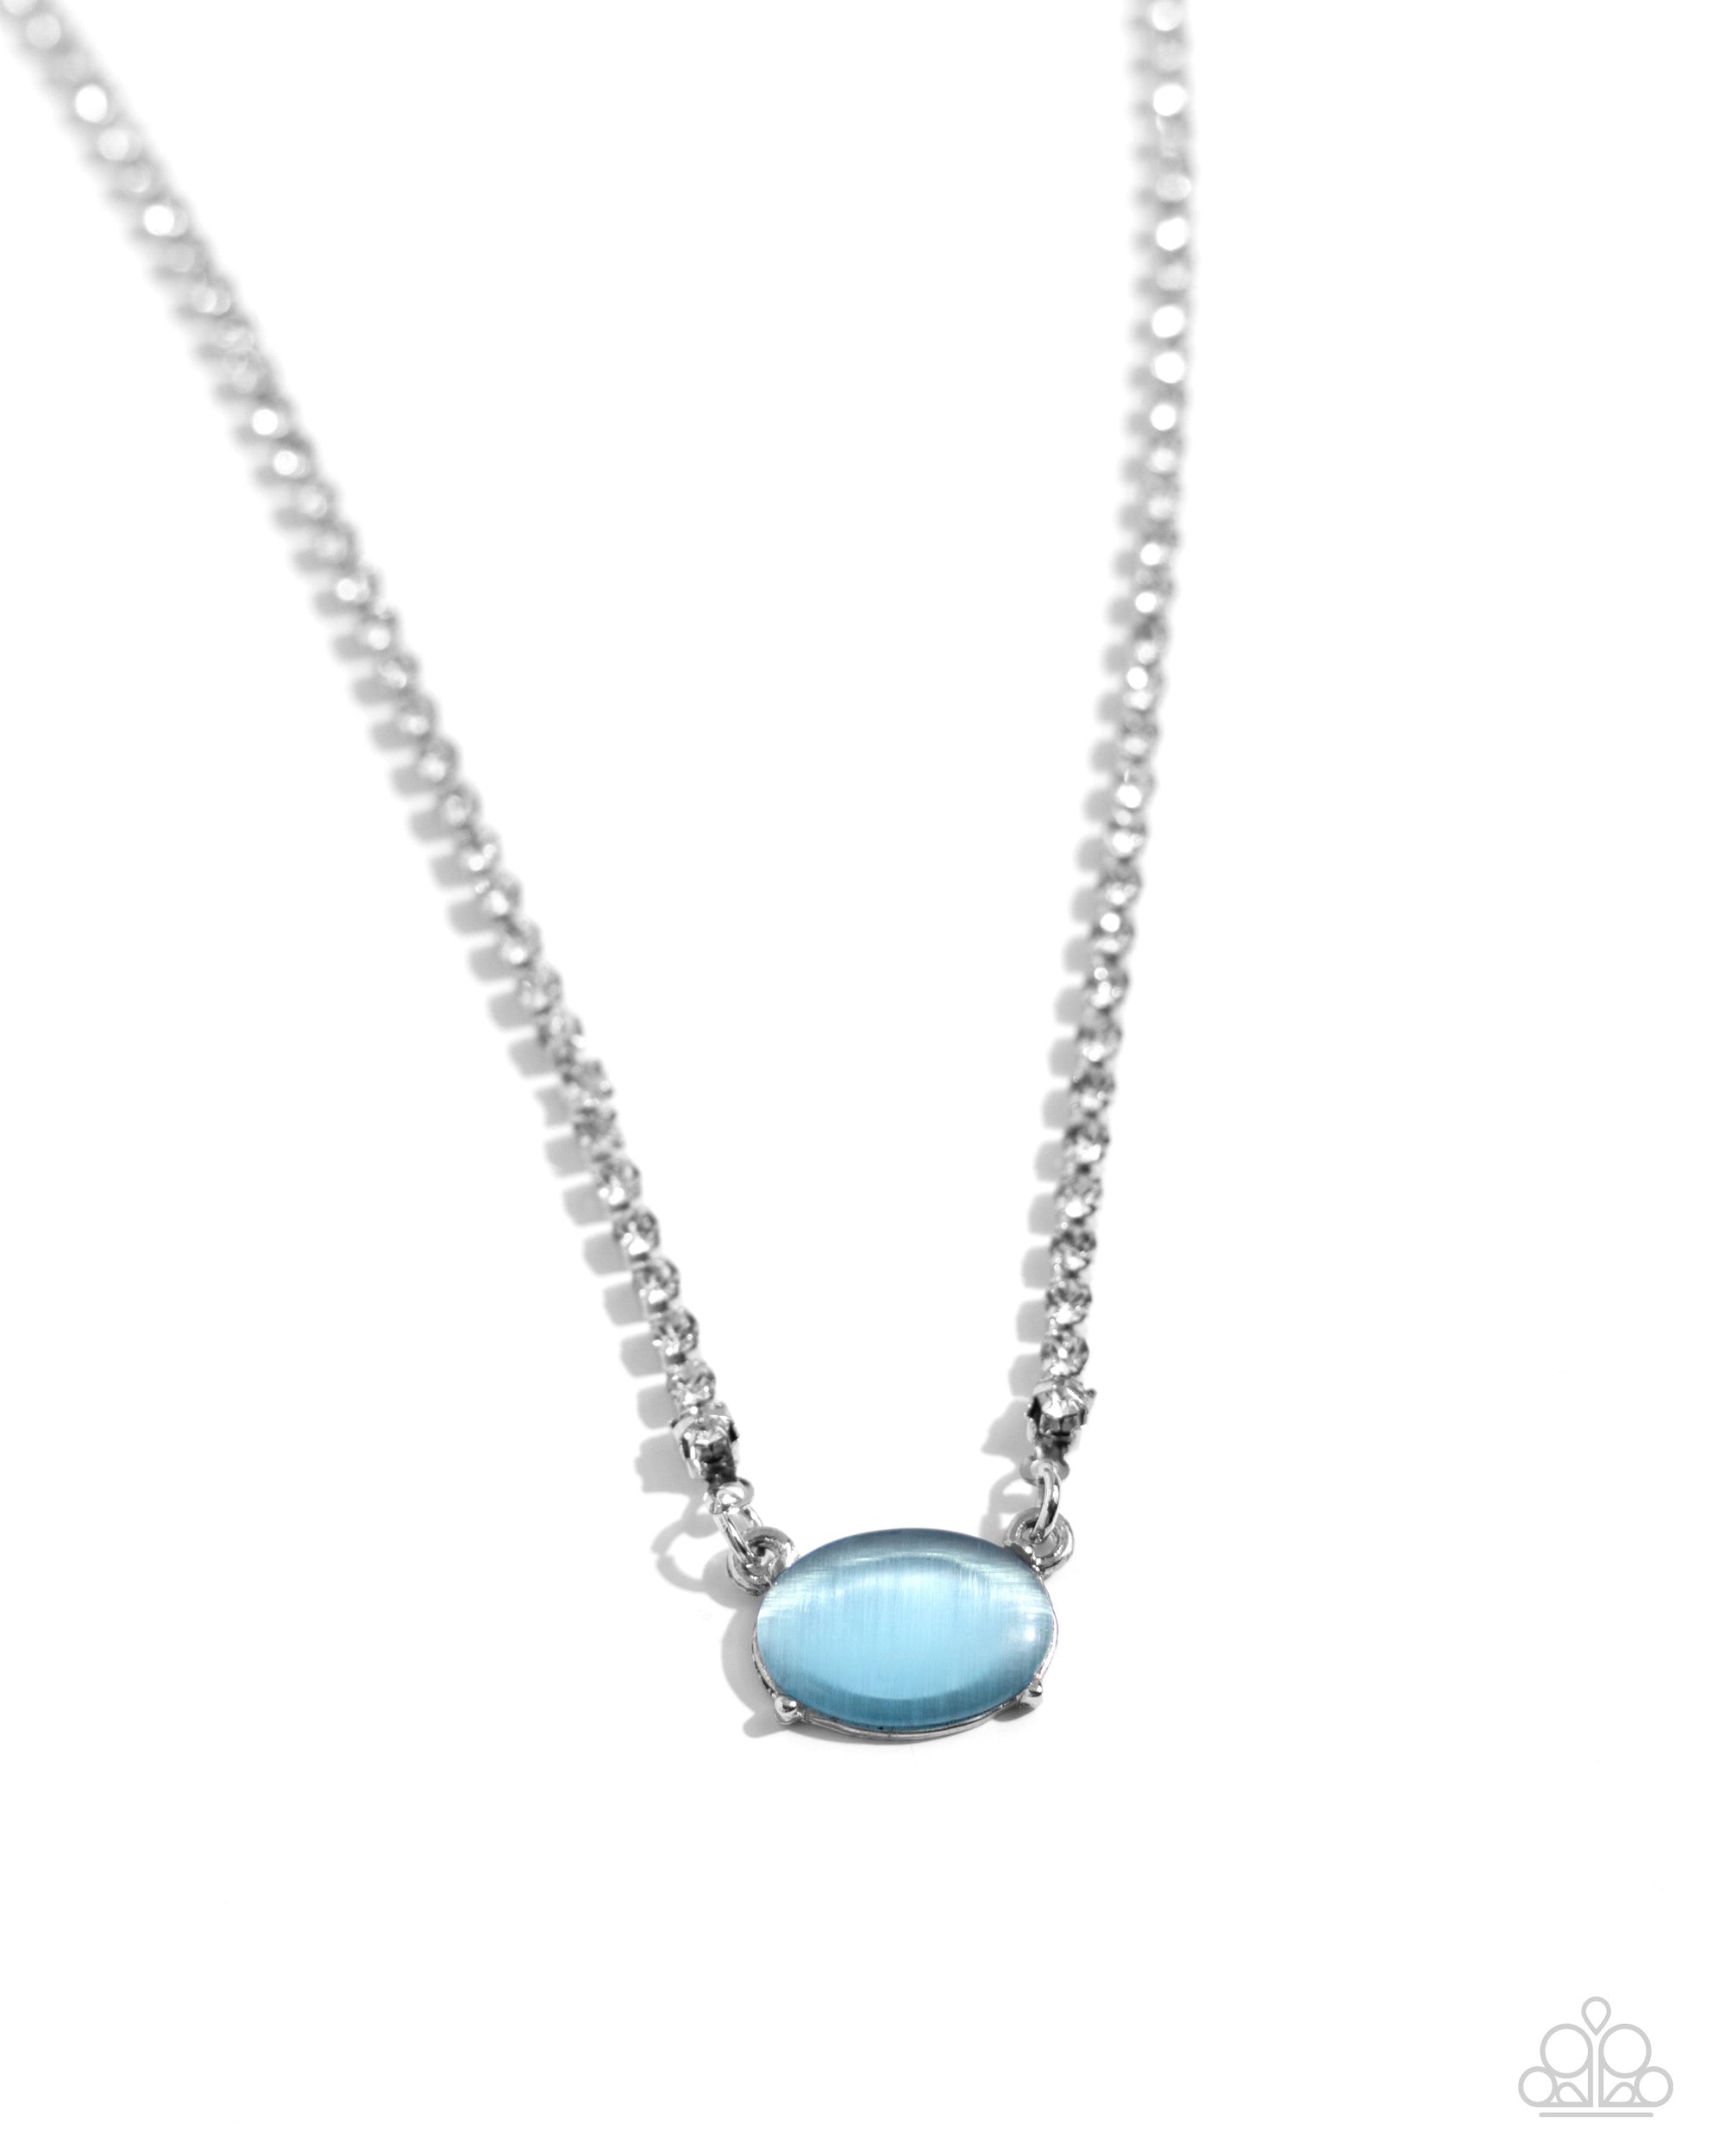 Dynamic Delicacy Blue Cat's Eye & White Rhinestone Necklace - Paparazzi Accessories- lightbox - CarasShop.com - $5 Jewelry by Cara Jewels